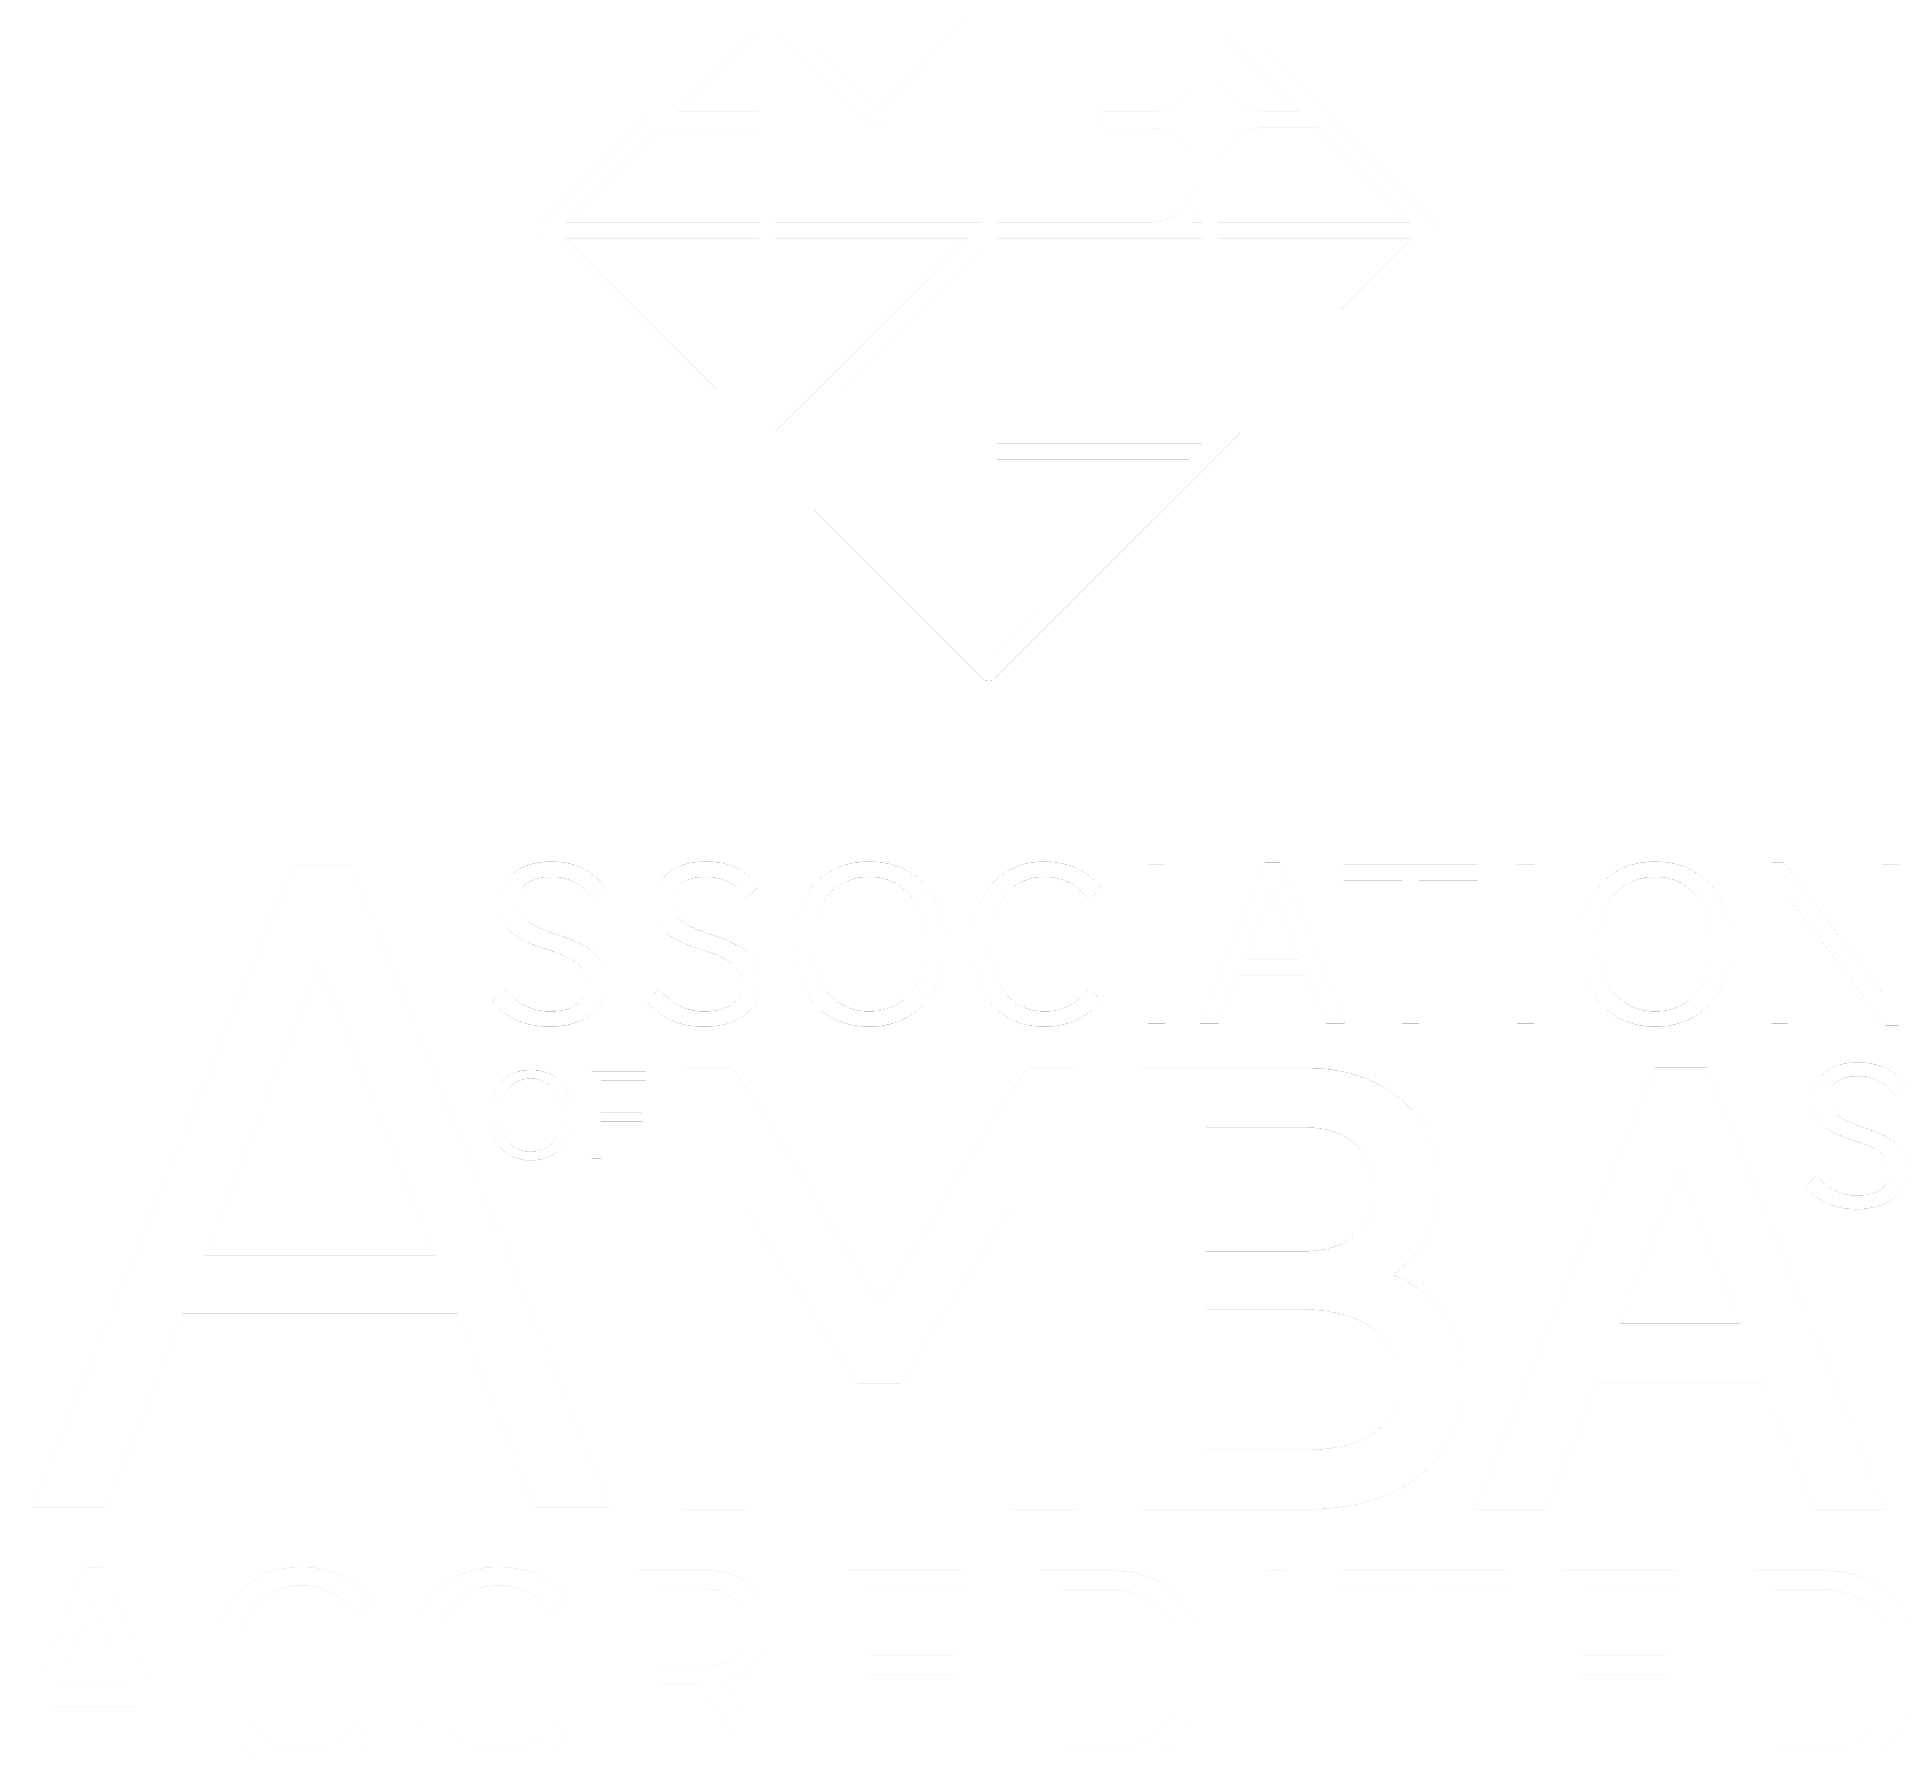 AMBA Association of MBAs